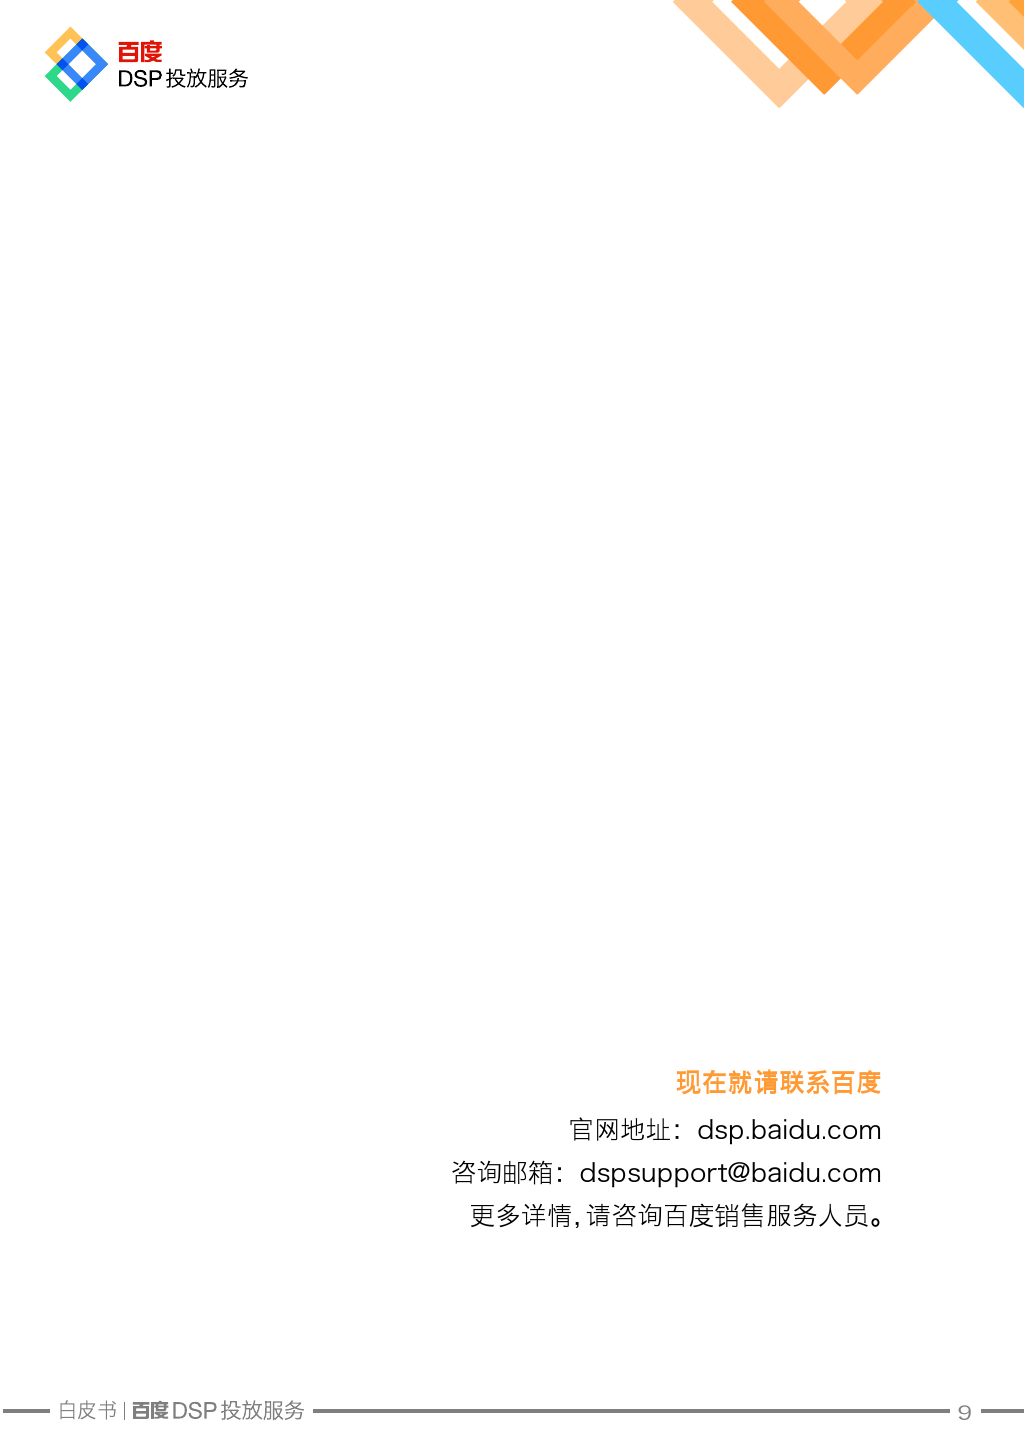 Baidu DSP Service White Paper_000010